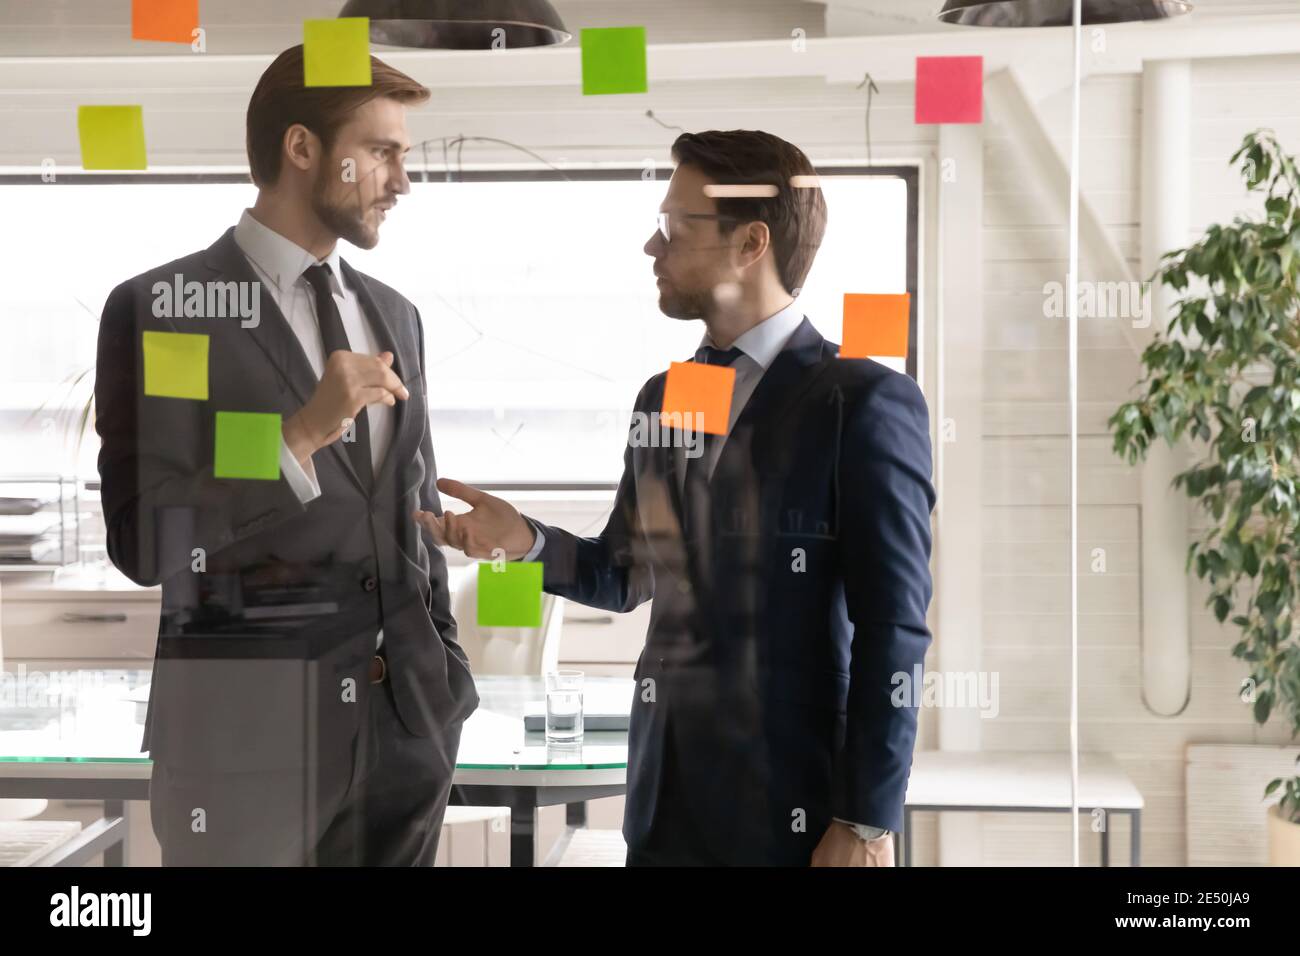 Kollegen diskutieren Projektstrategie, stehen neben Glaswand mit Aufklebern Stockfoto